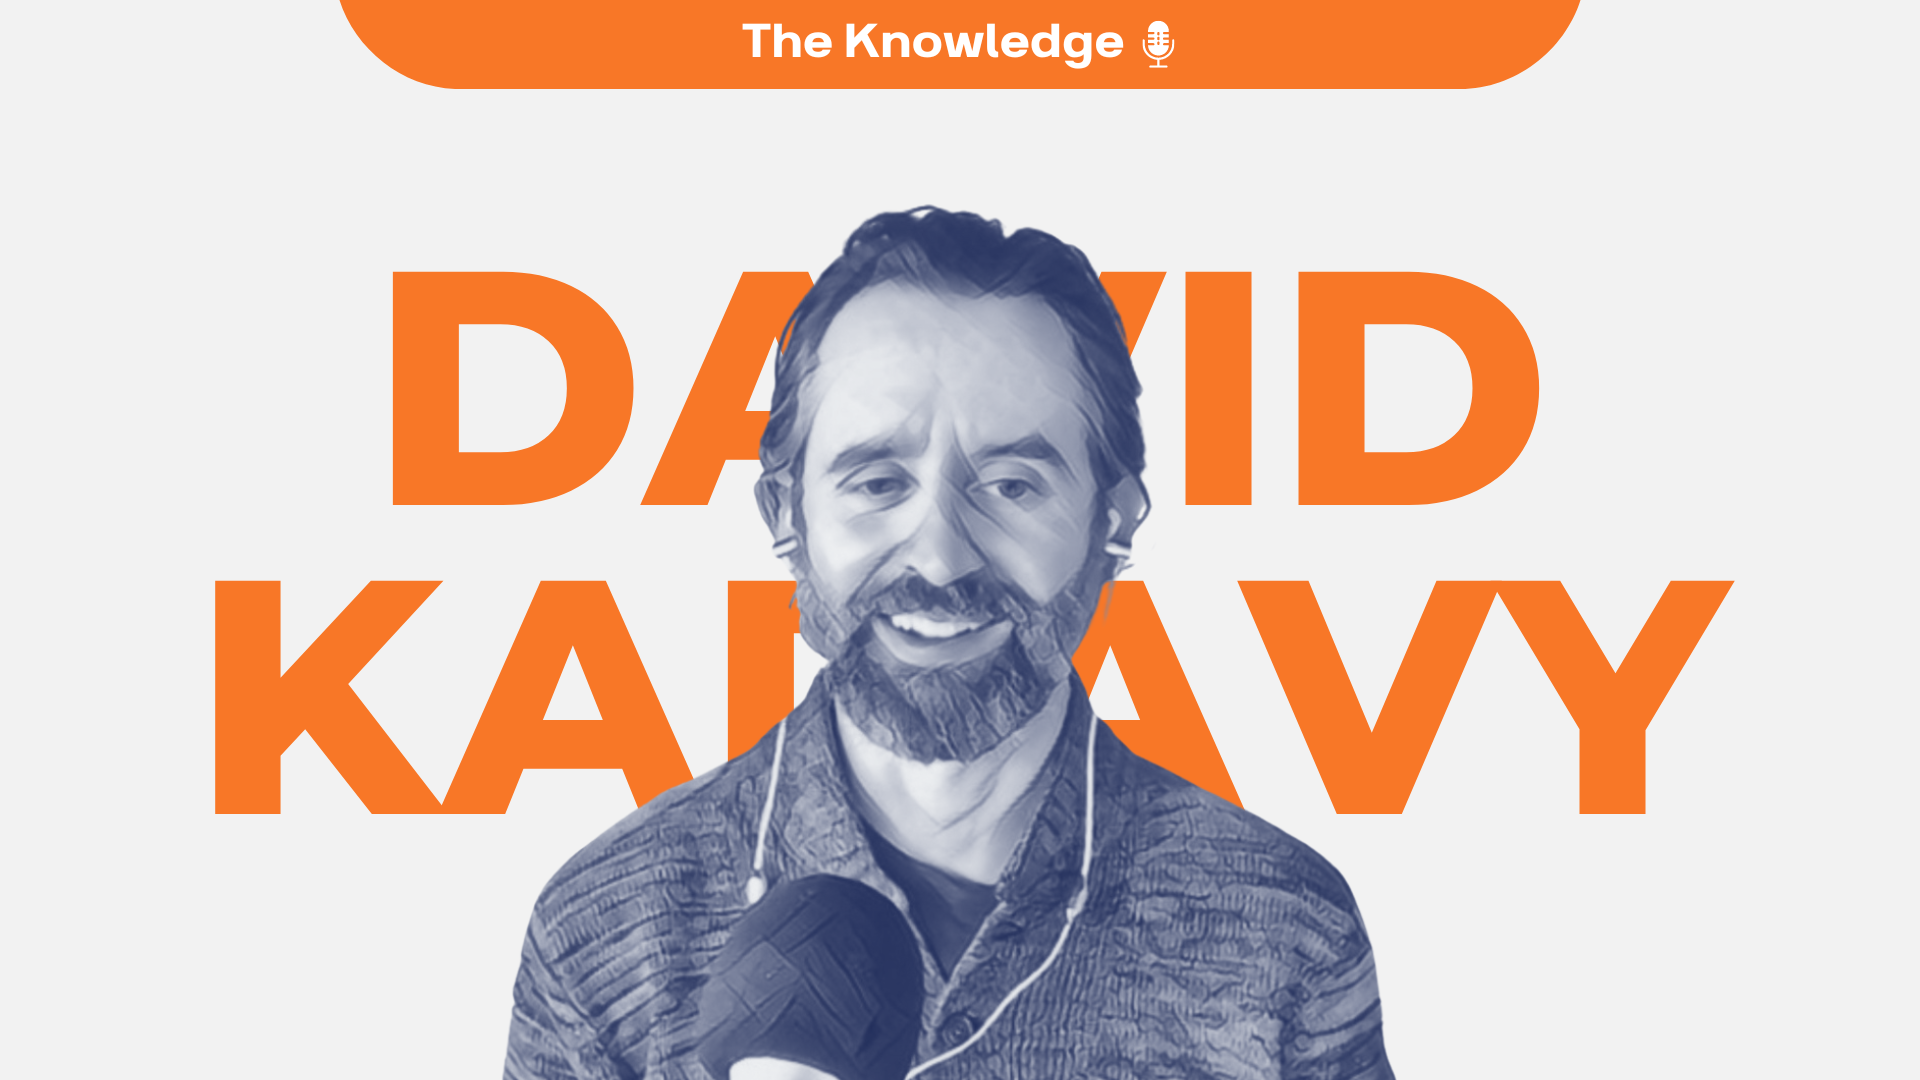 🎙 Becoming prolific with David Kadavy